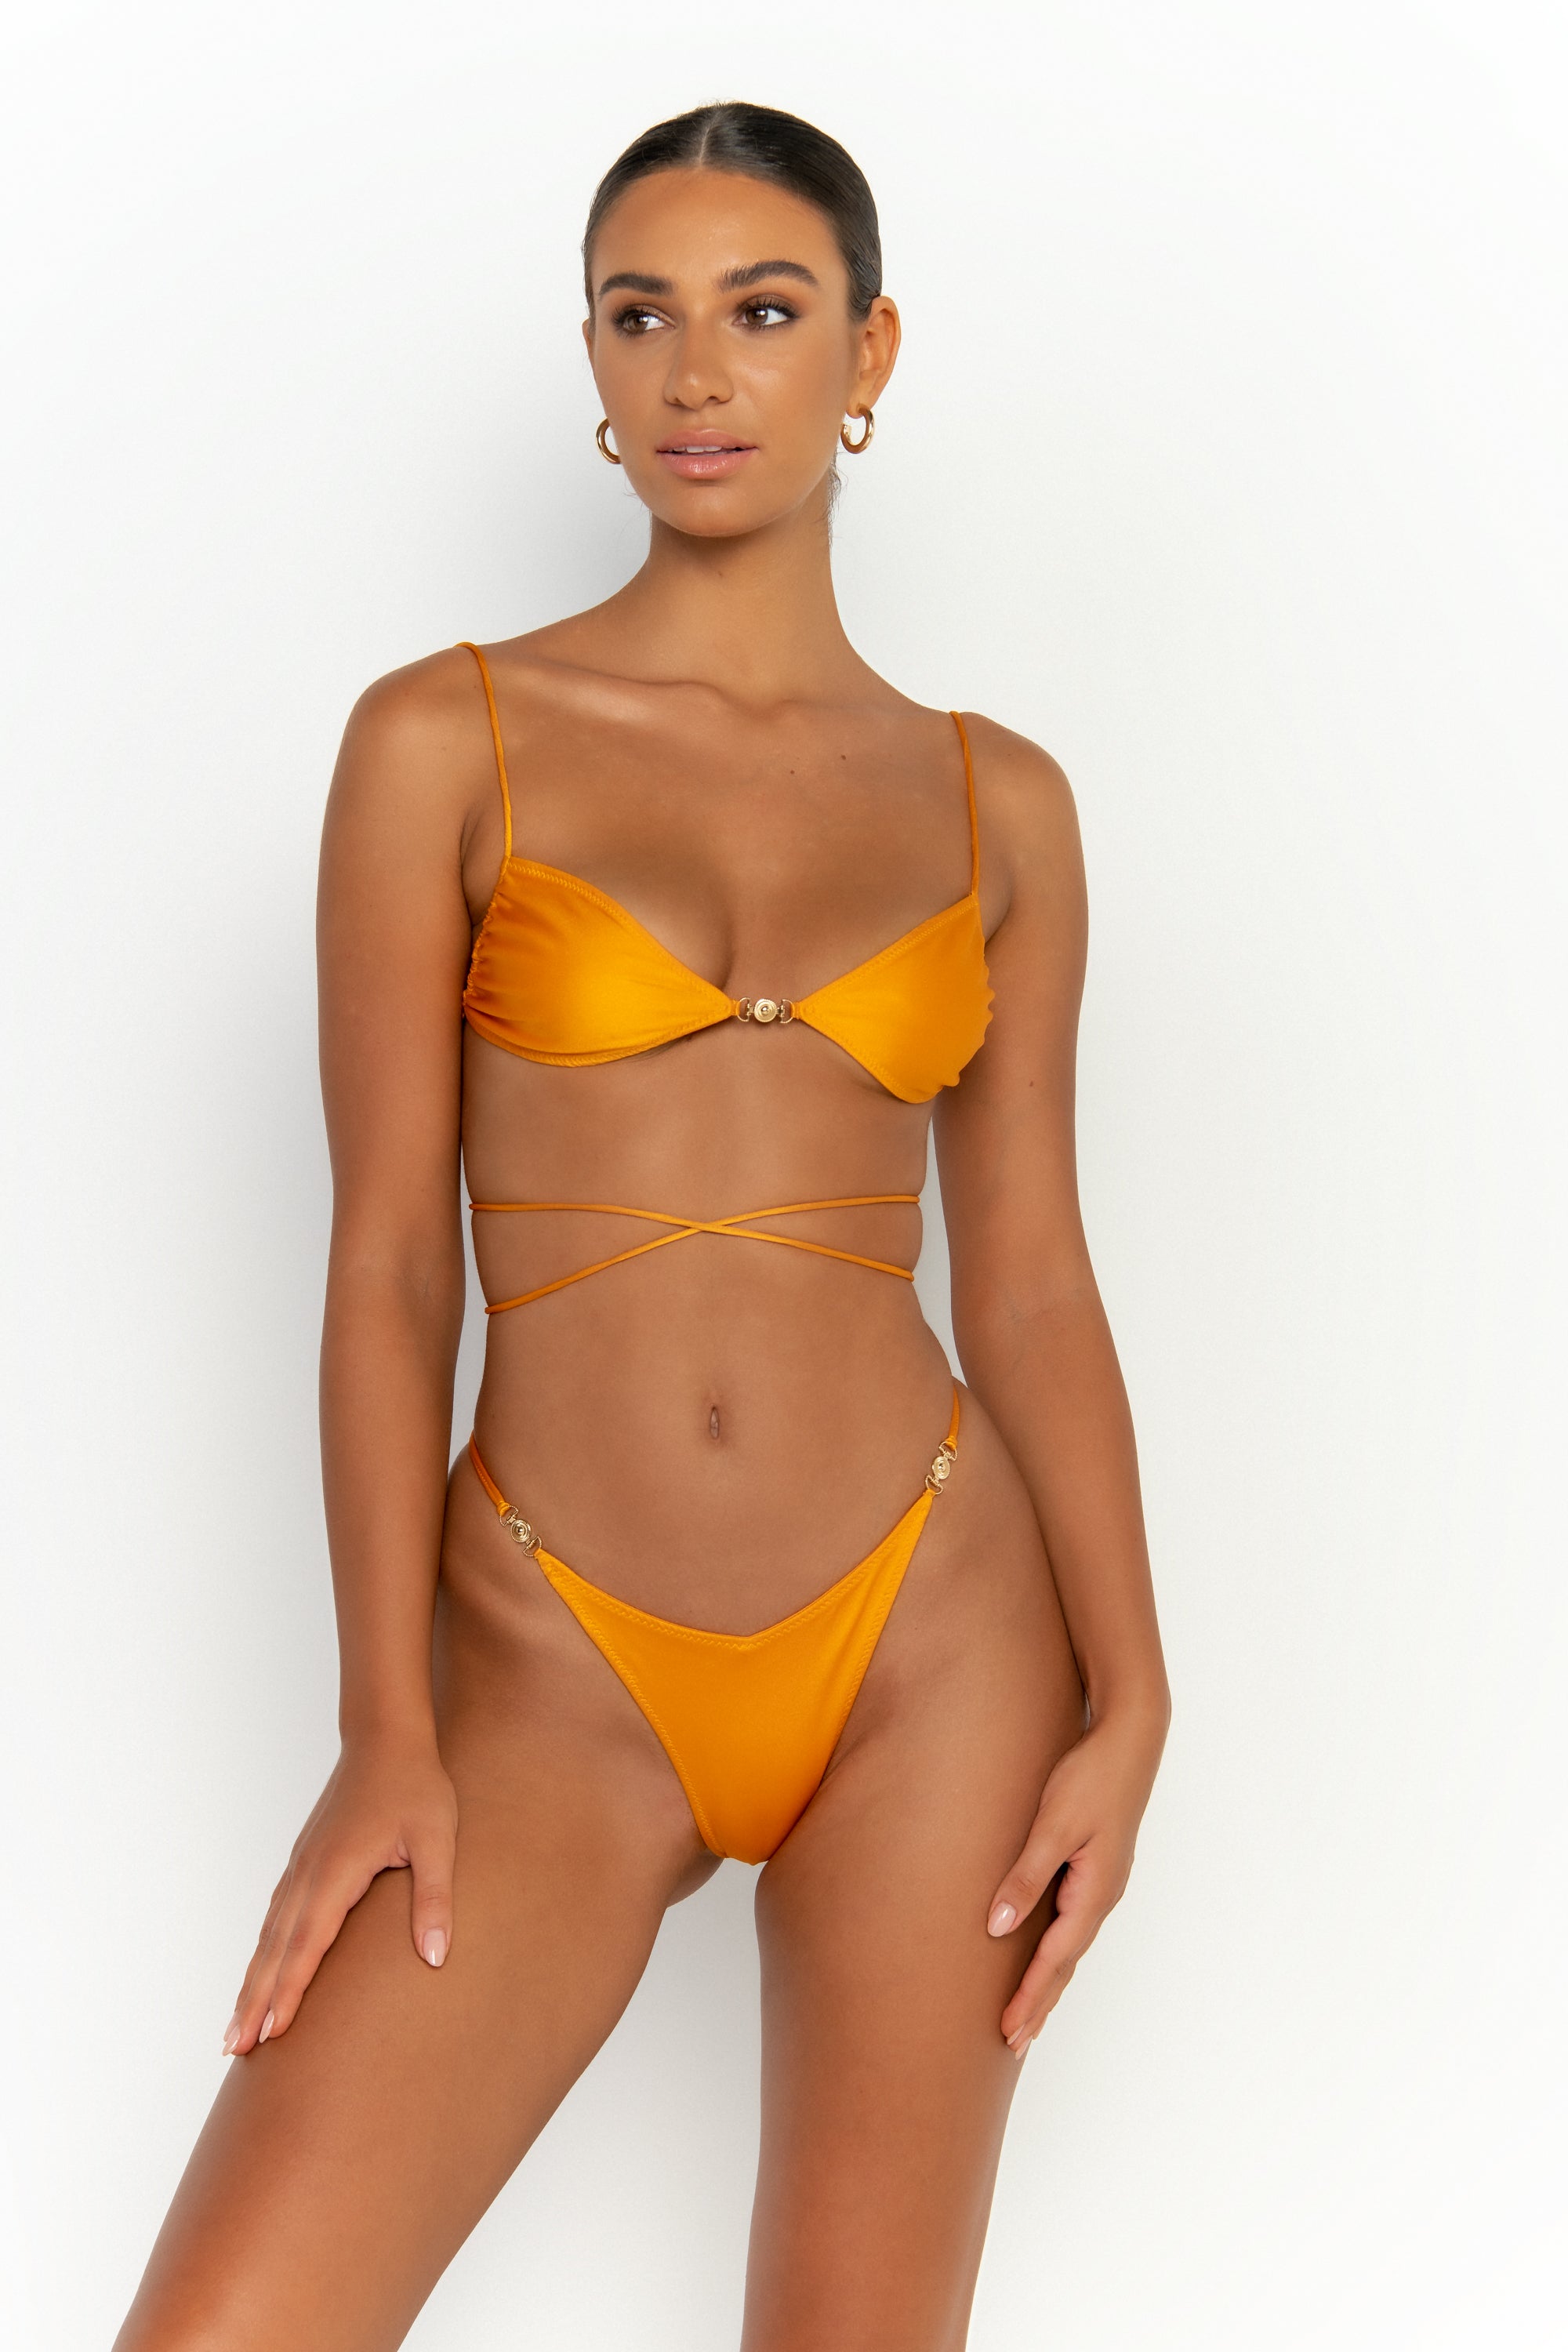 front view womens swimwear designed as high quality bikini from sommer swim swimwear australia - ella turmeric is a light orange bikini with bralette bikini top